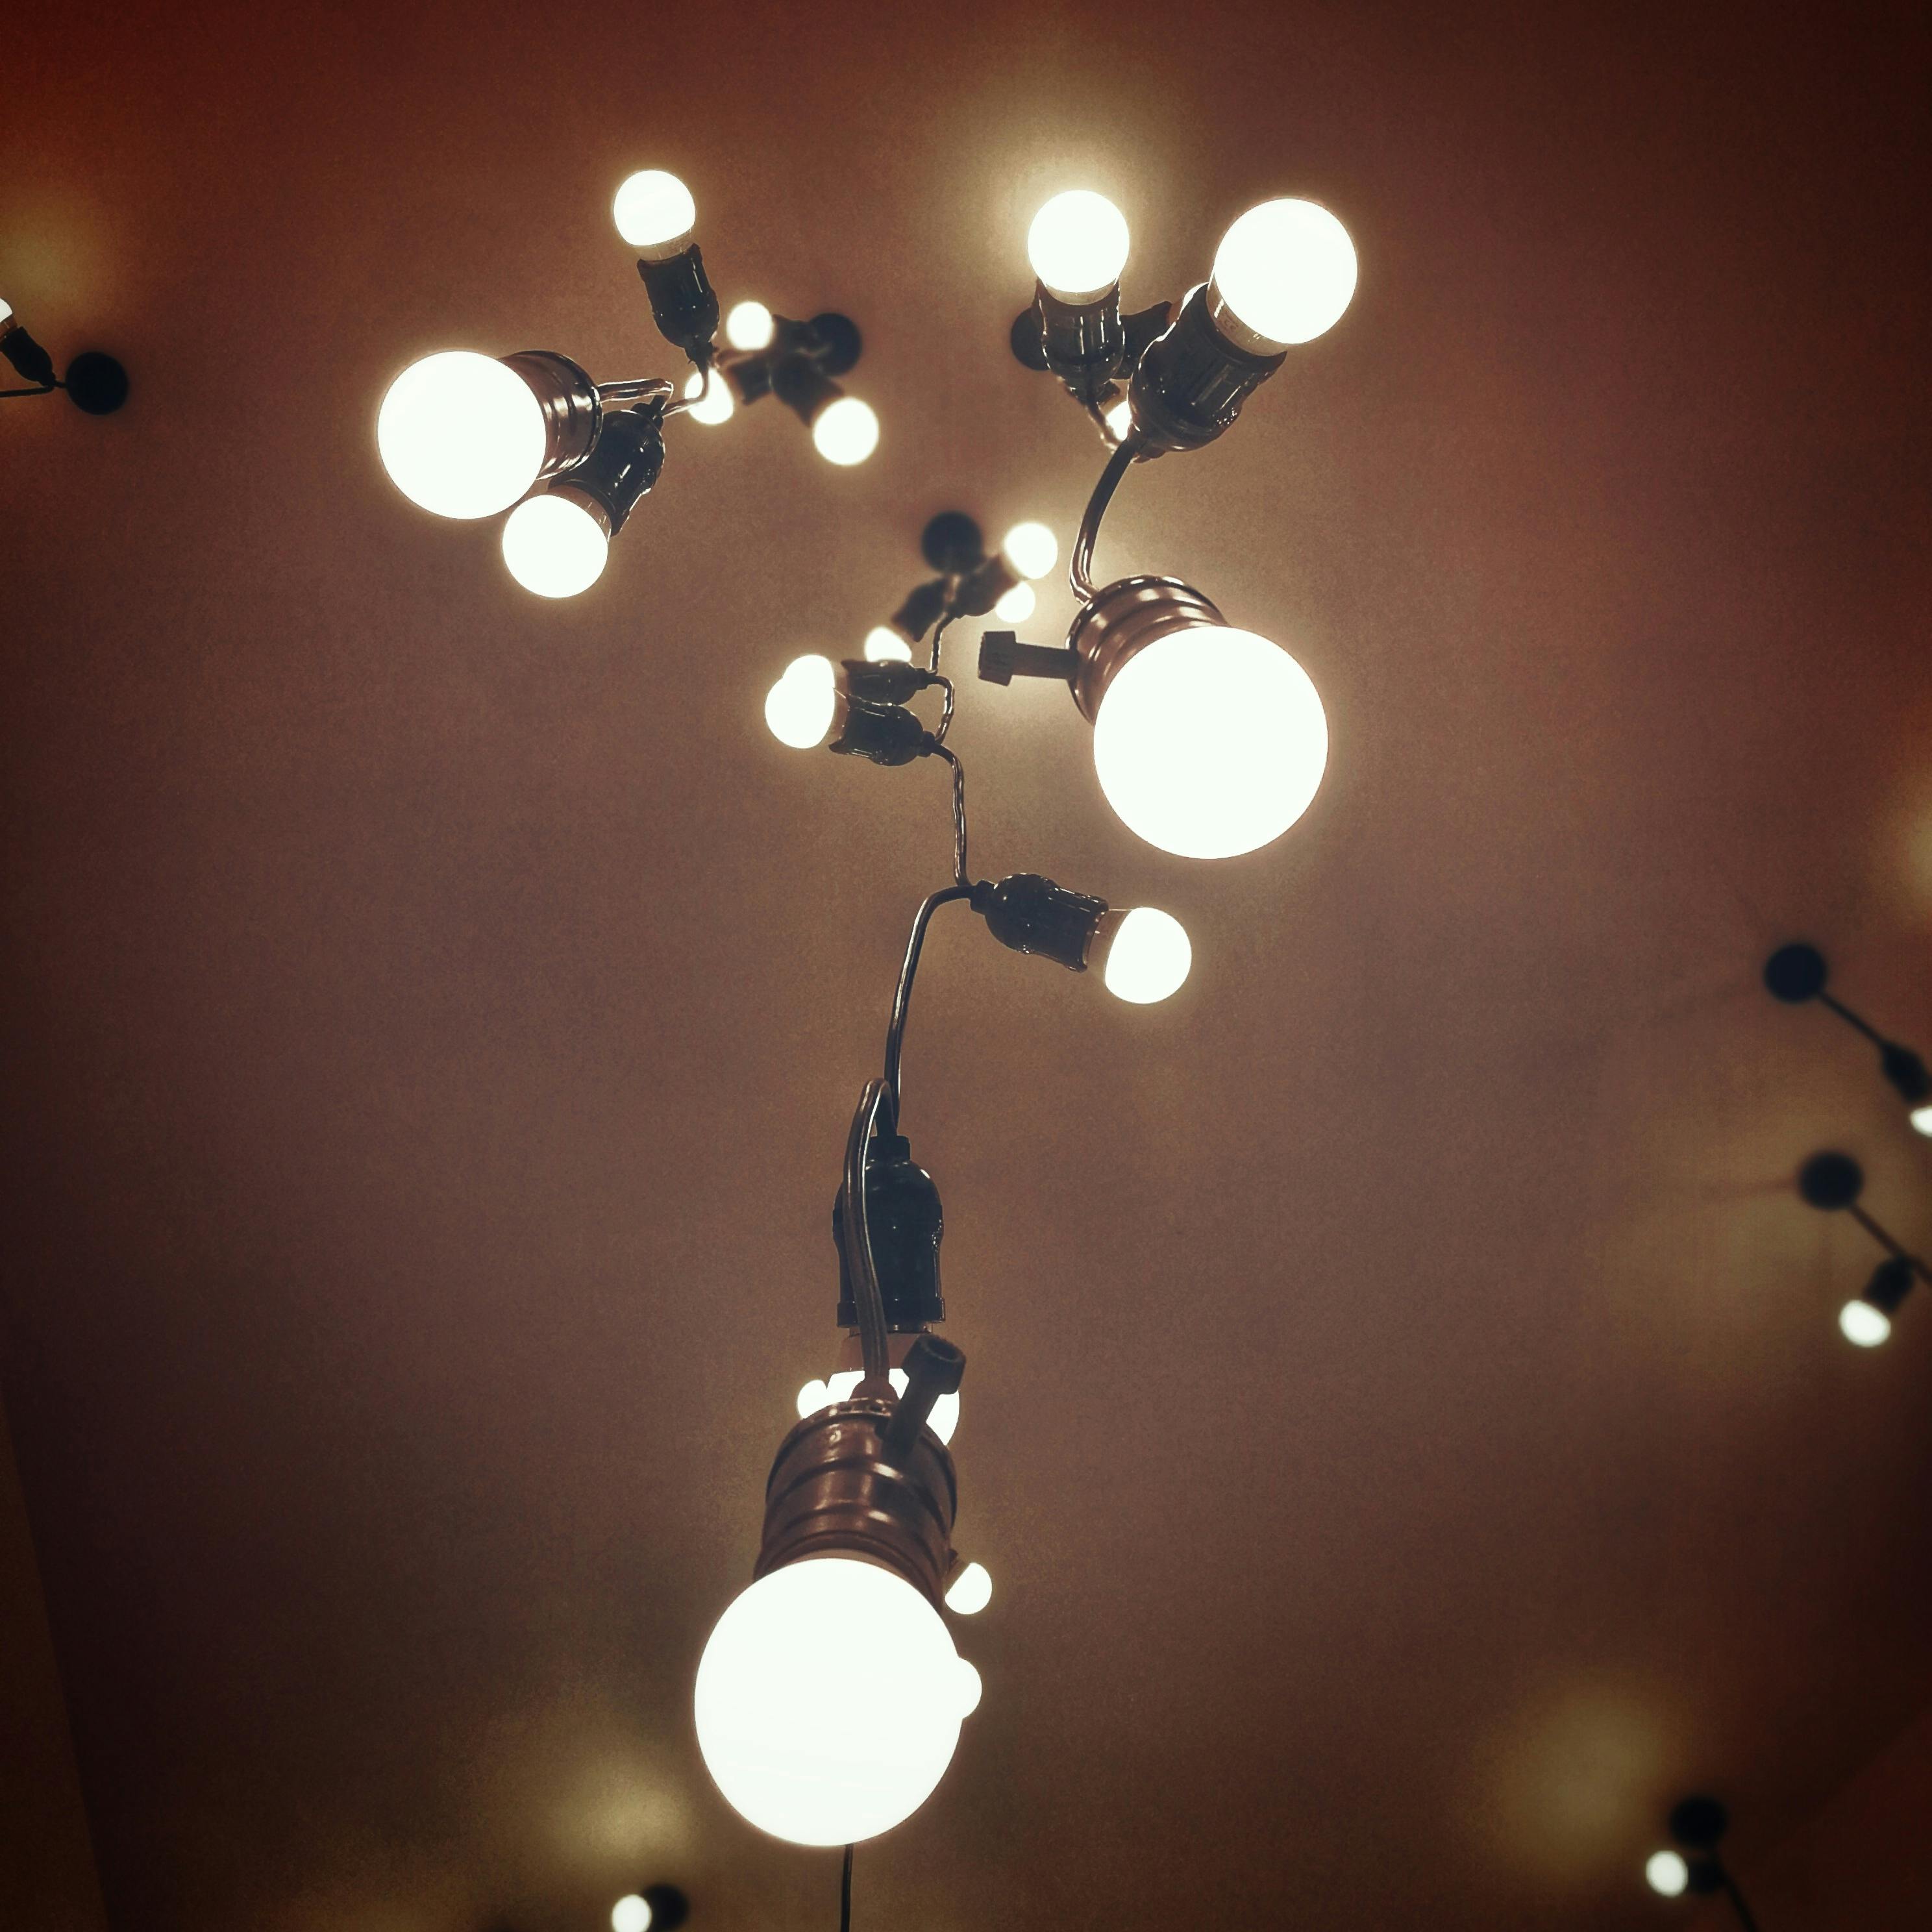 Free stock photo of bulbs, ceiling, light bulbs